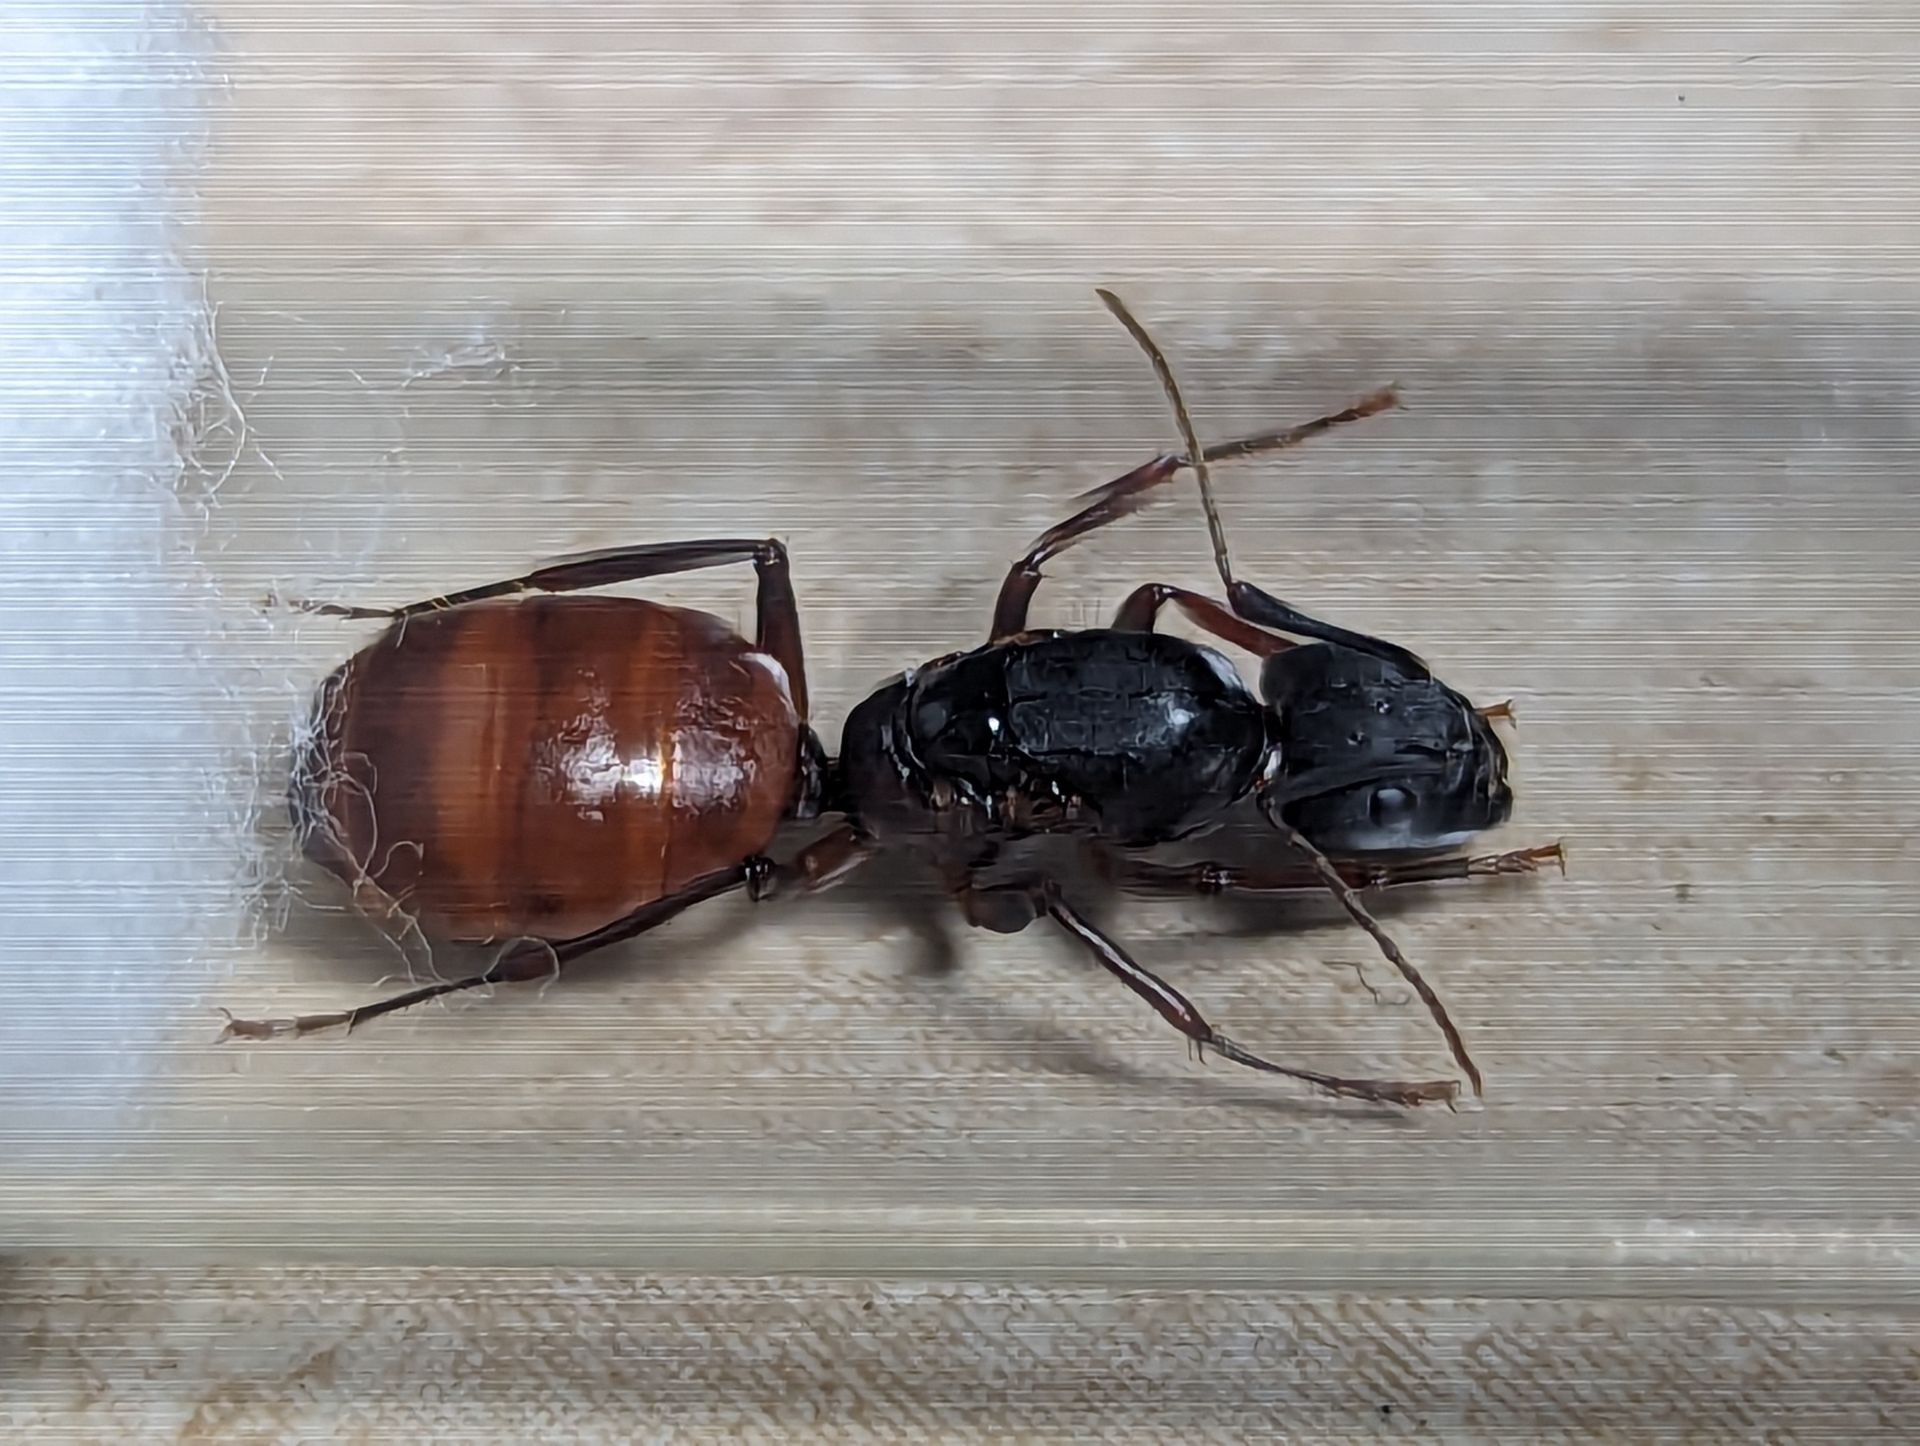 Camponotus us-ca02 queen